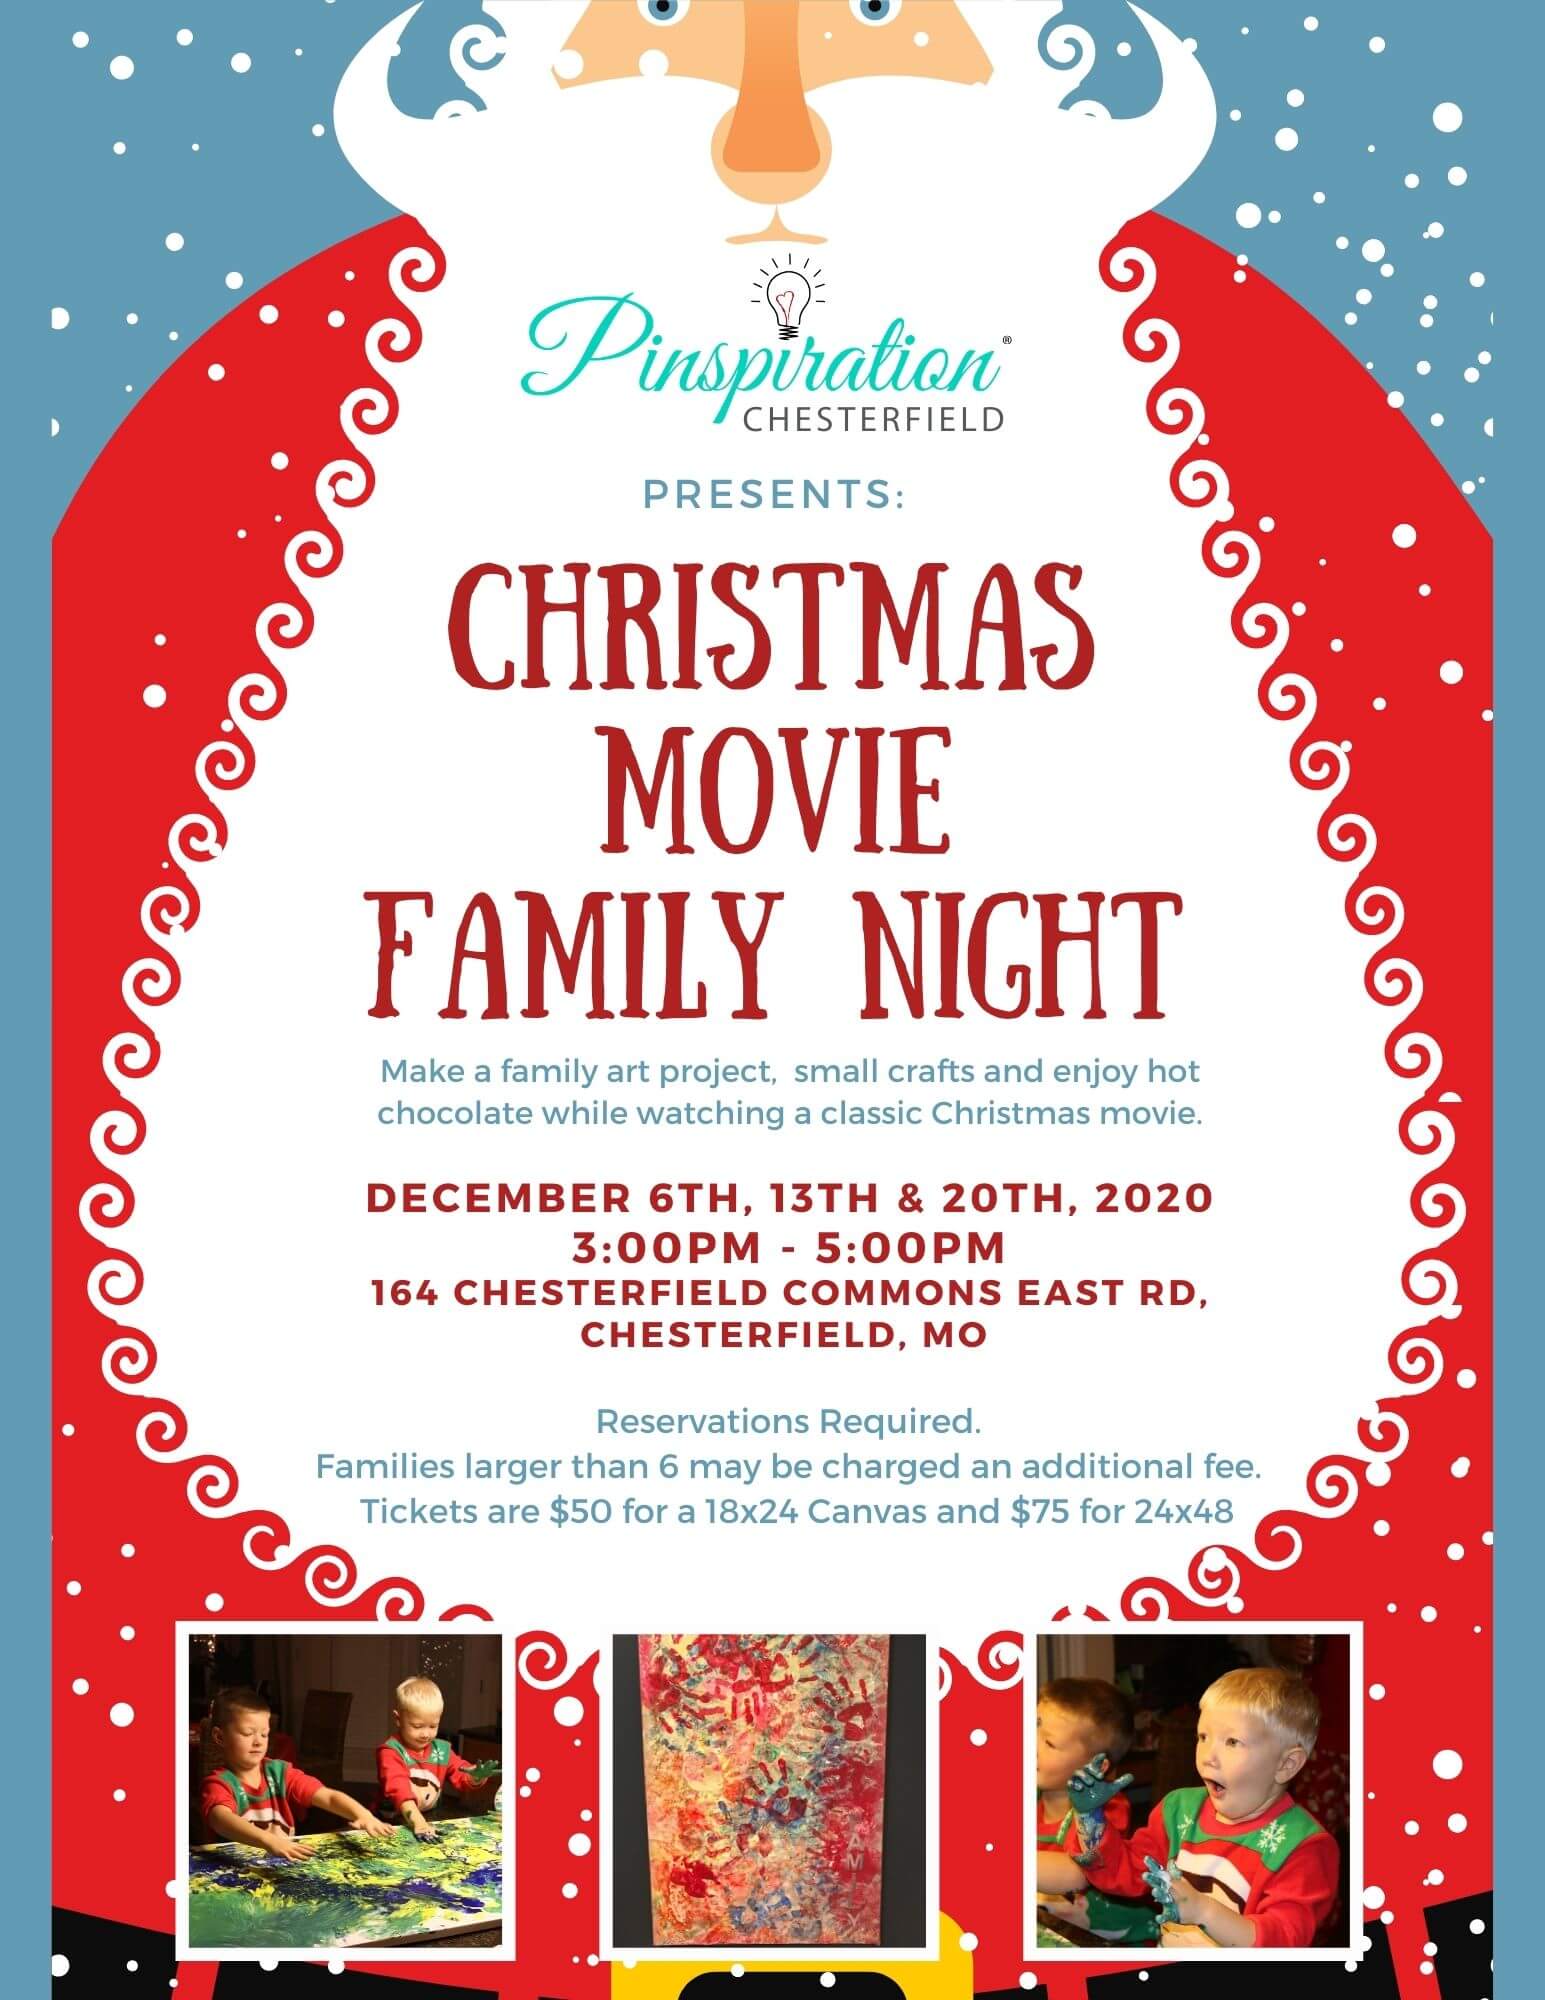 Christmas Movie Family Night at Pinspiration